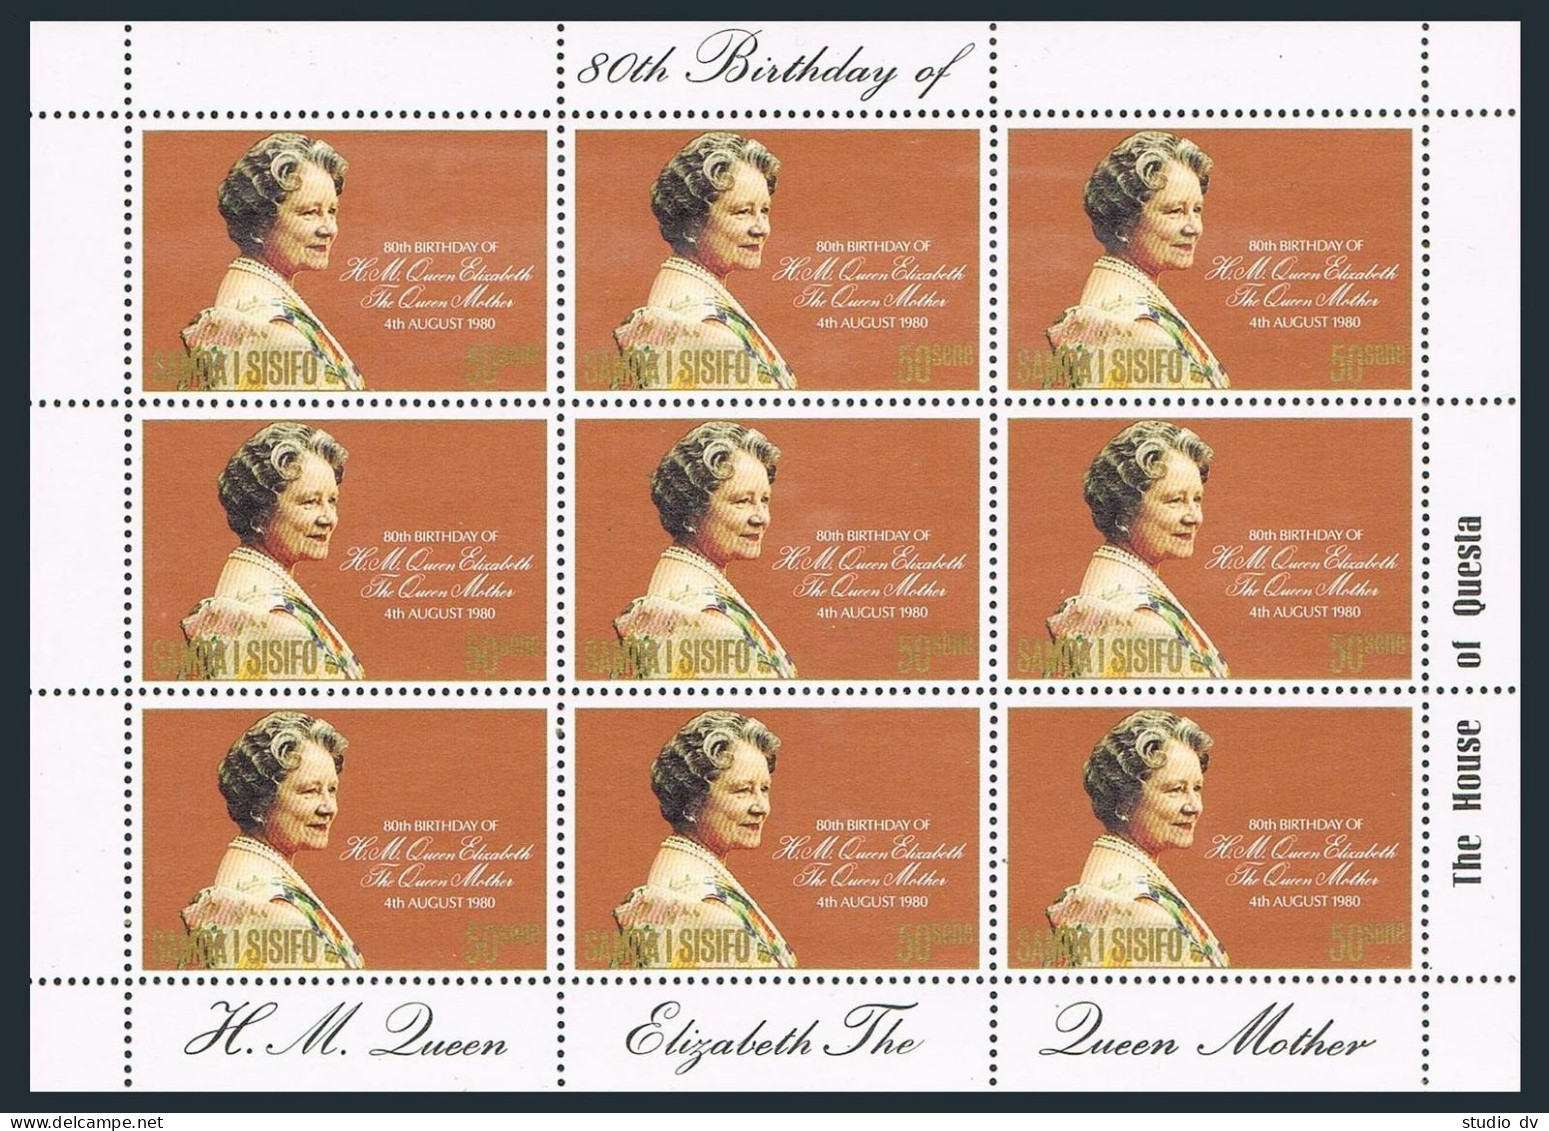 Samoa 532 Sheet, MNH. Michel 434 Klb. Queen Mother Elizabeth 80 Birthday, 1980. - Samoa